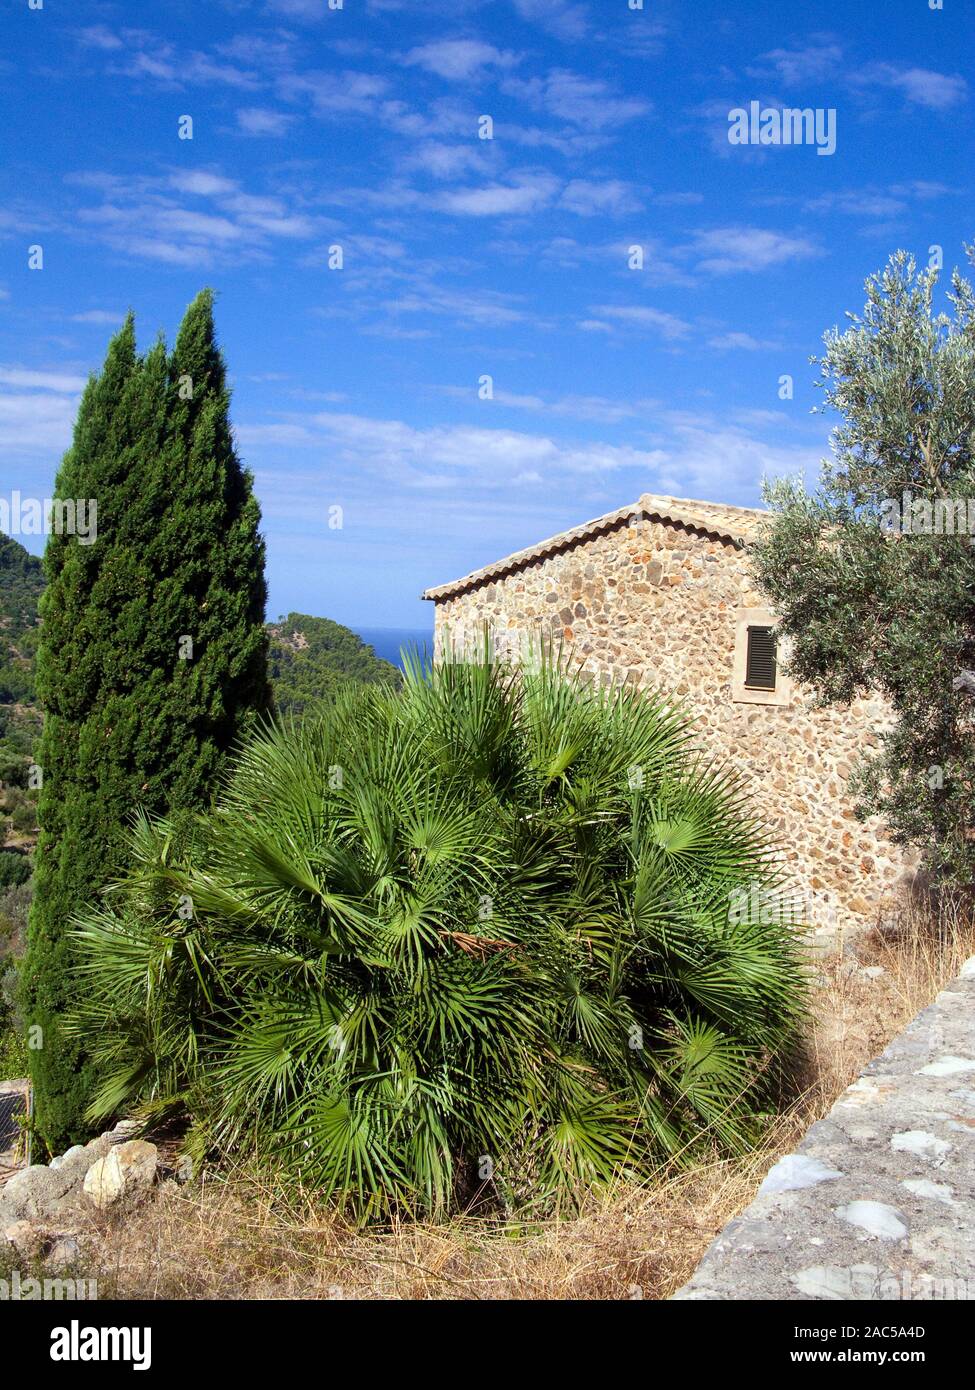 Saw Palmetto palm tree (Serenoa repens, synonym: Sabal serrulata) at a small Finca, Estellences, Mallorca, Balearic islands, Spain Stock Photo